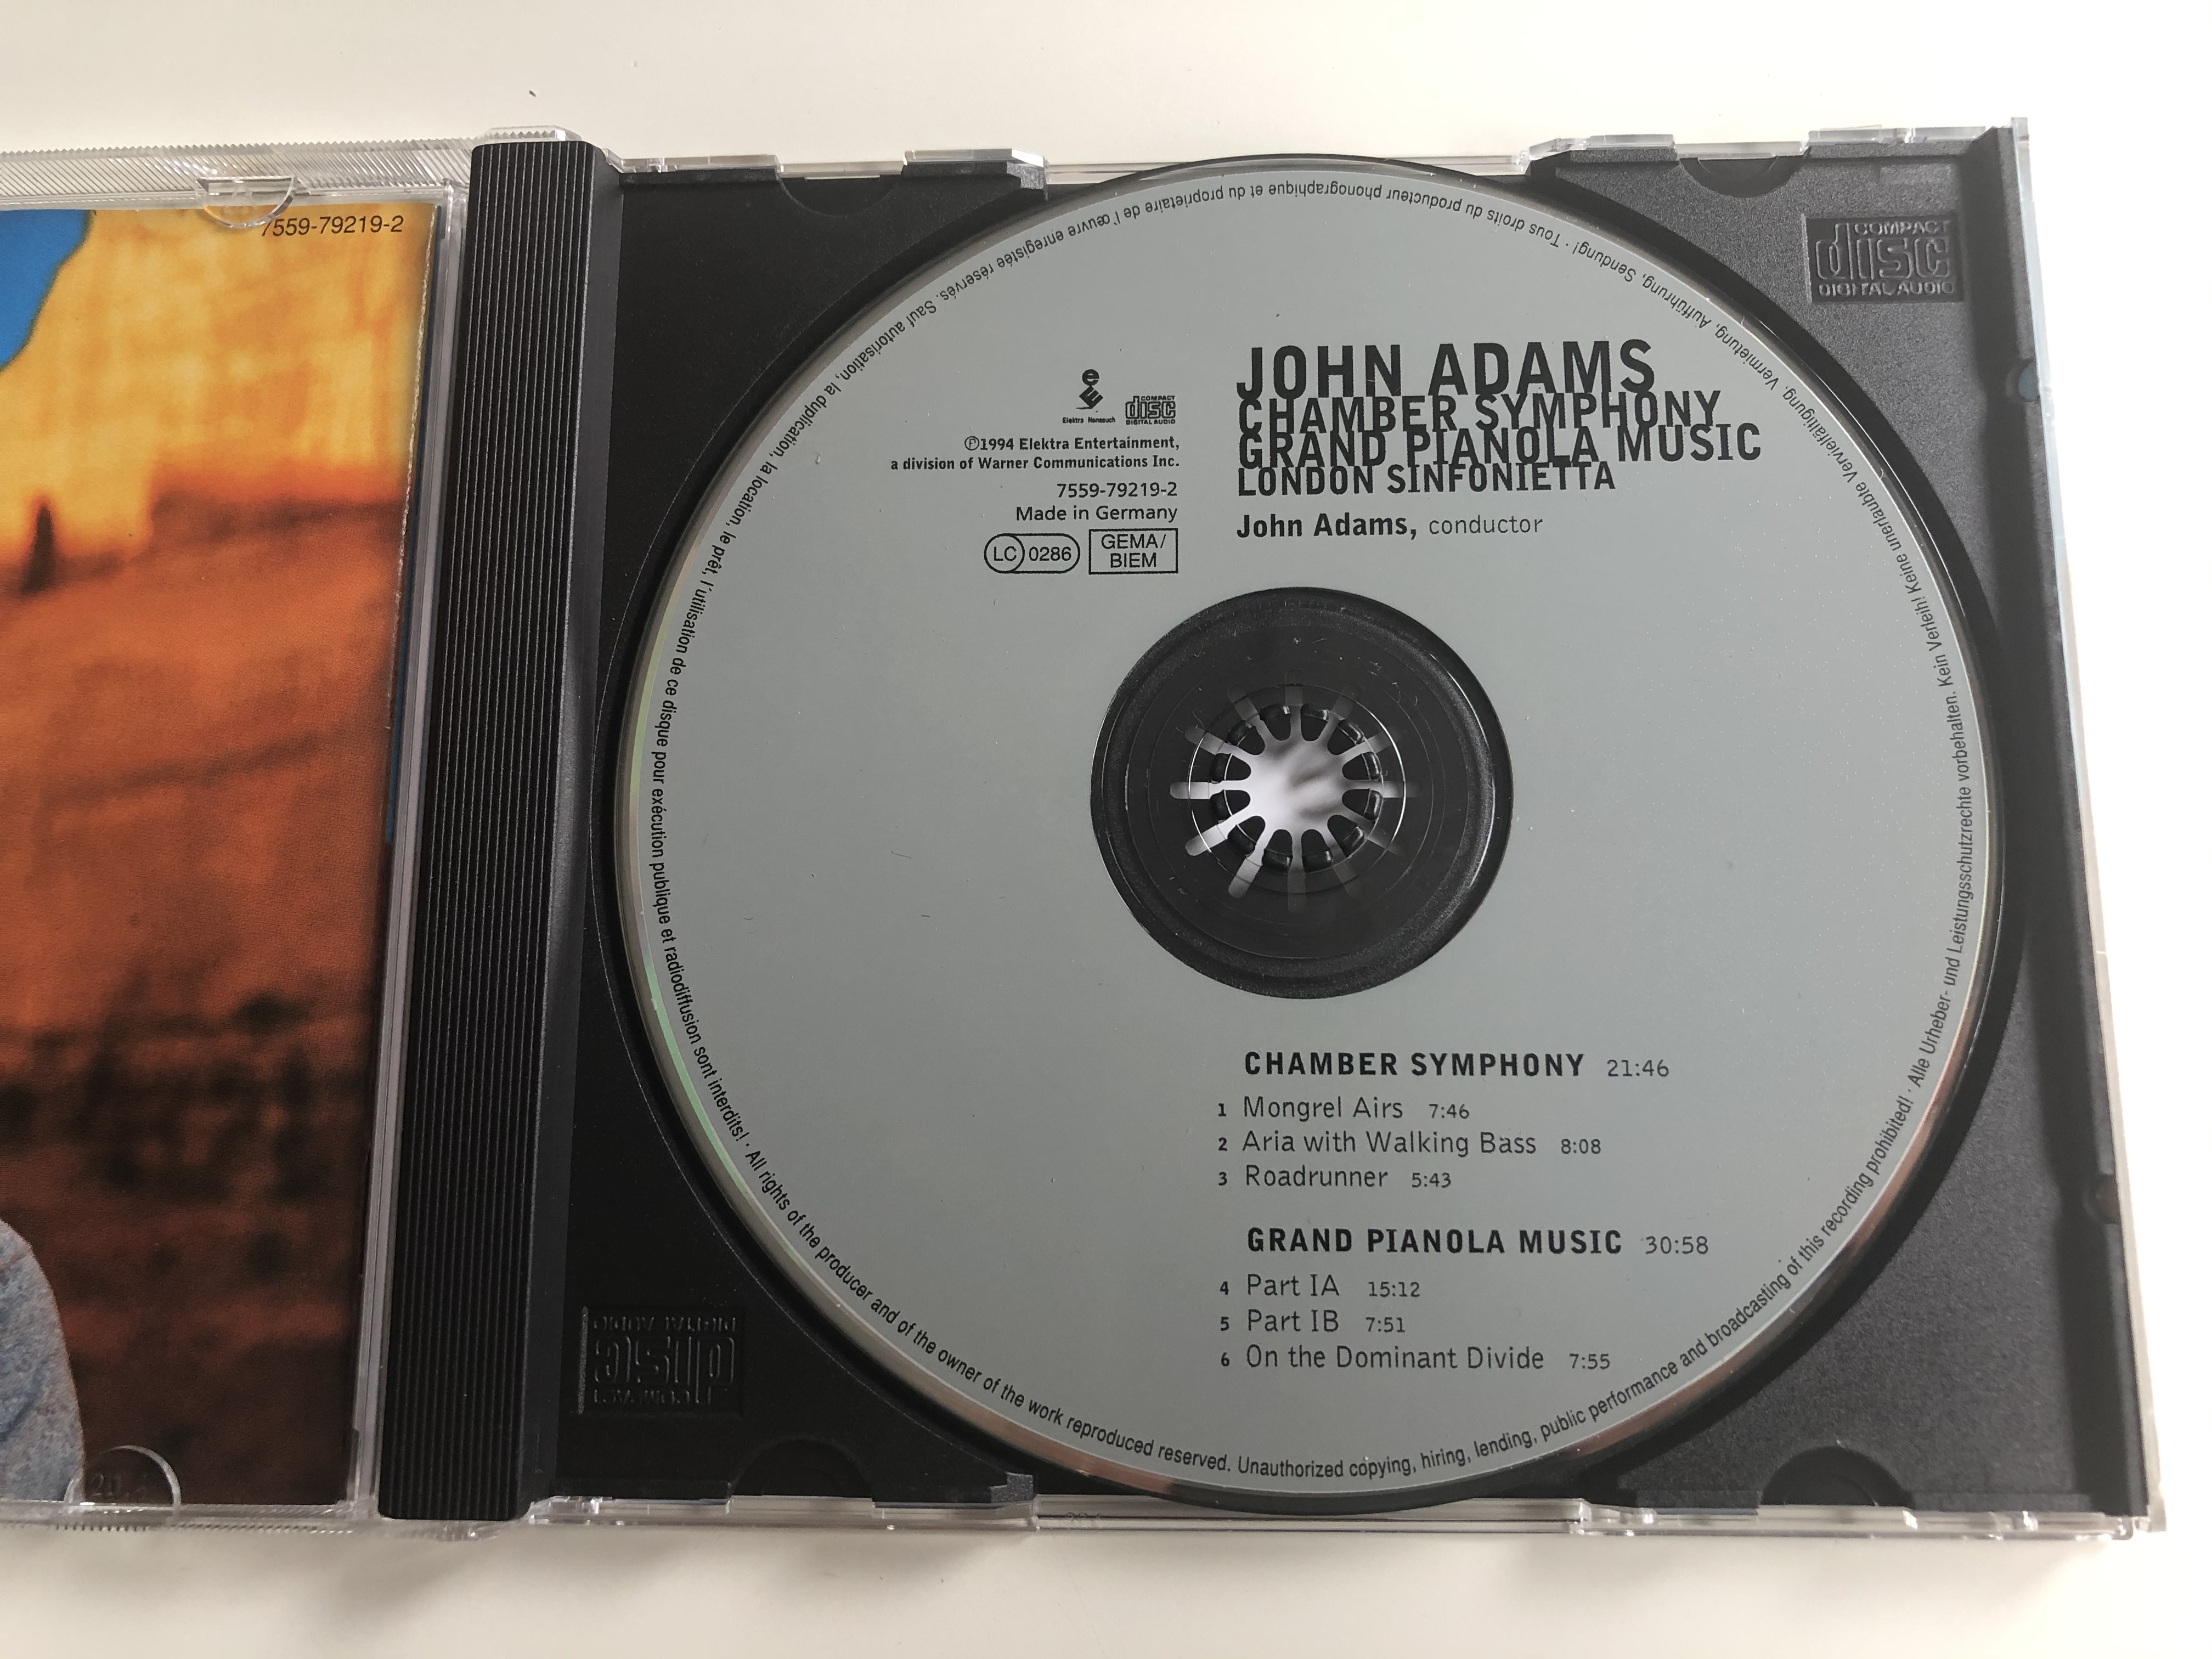 john-adams-chamber-symphony-grand-pianola-music-london-sinfonietta-elektra-nonesuch-audio-cd-1994-7559-79219-2-7-.jpg